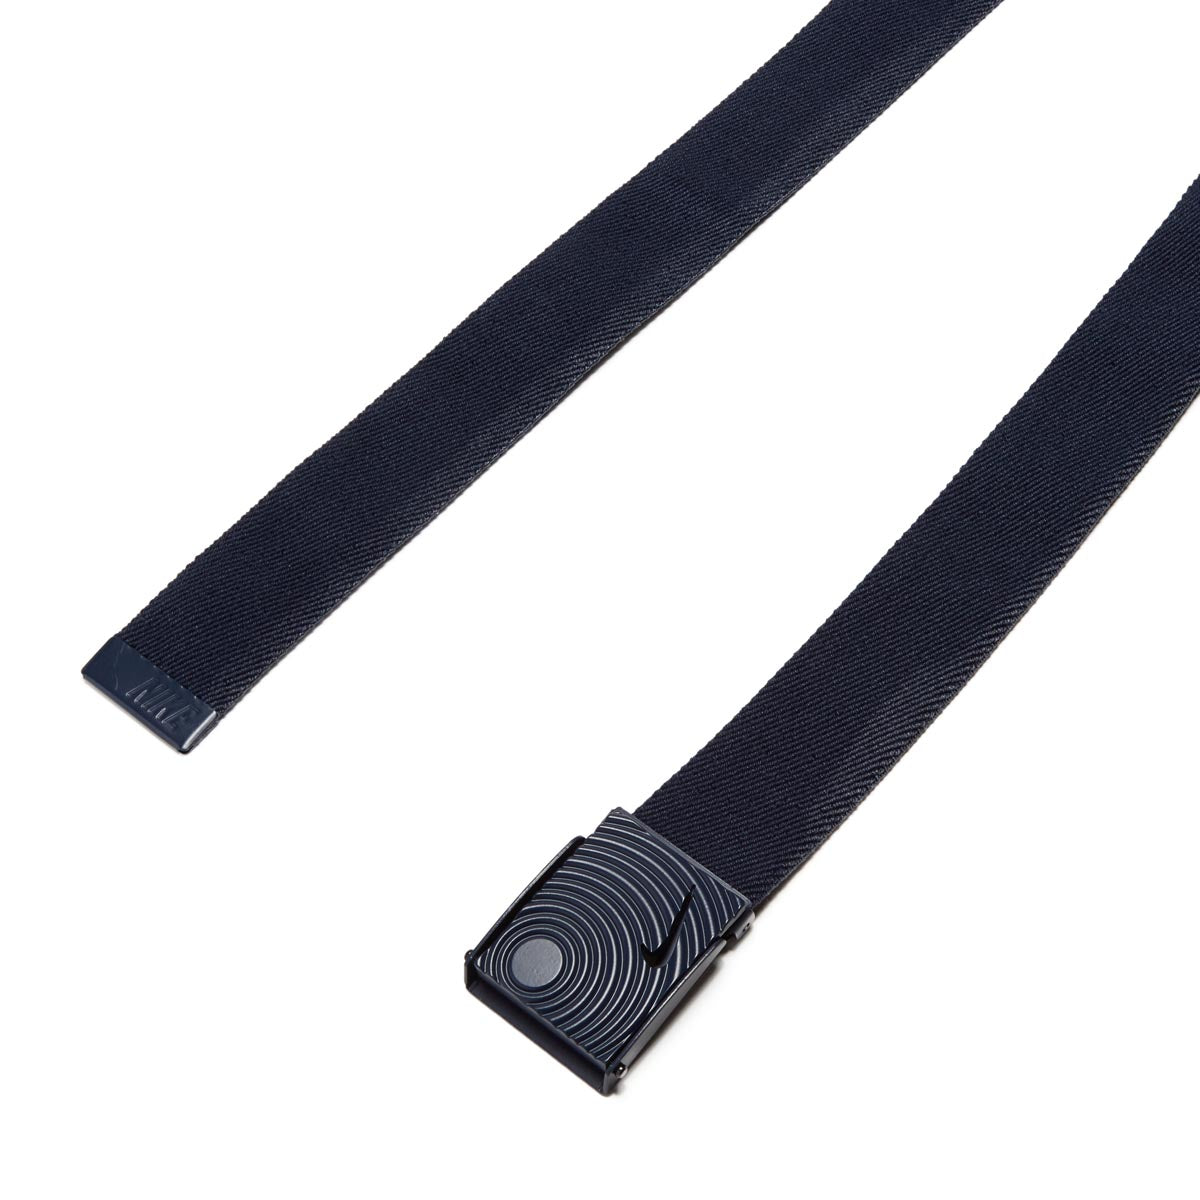 Nike Outsole Stretch Web Belt - Midnight Navy image 2